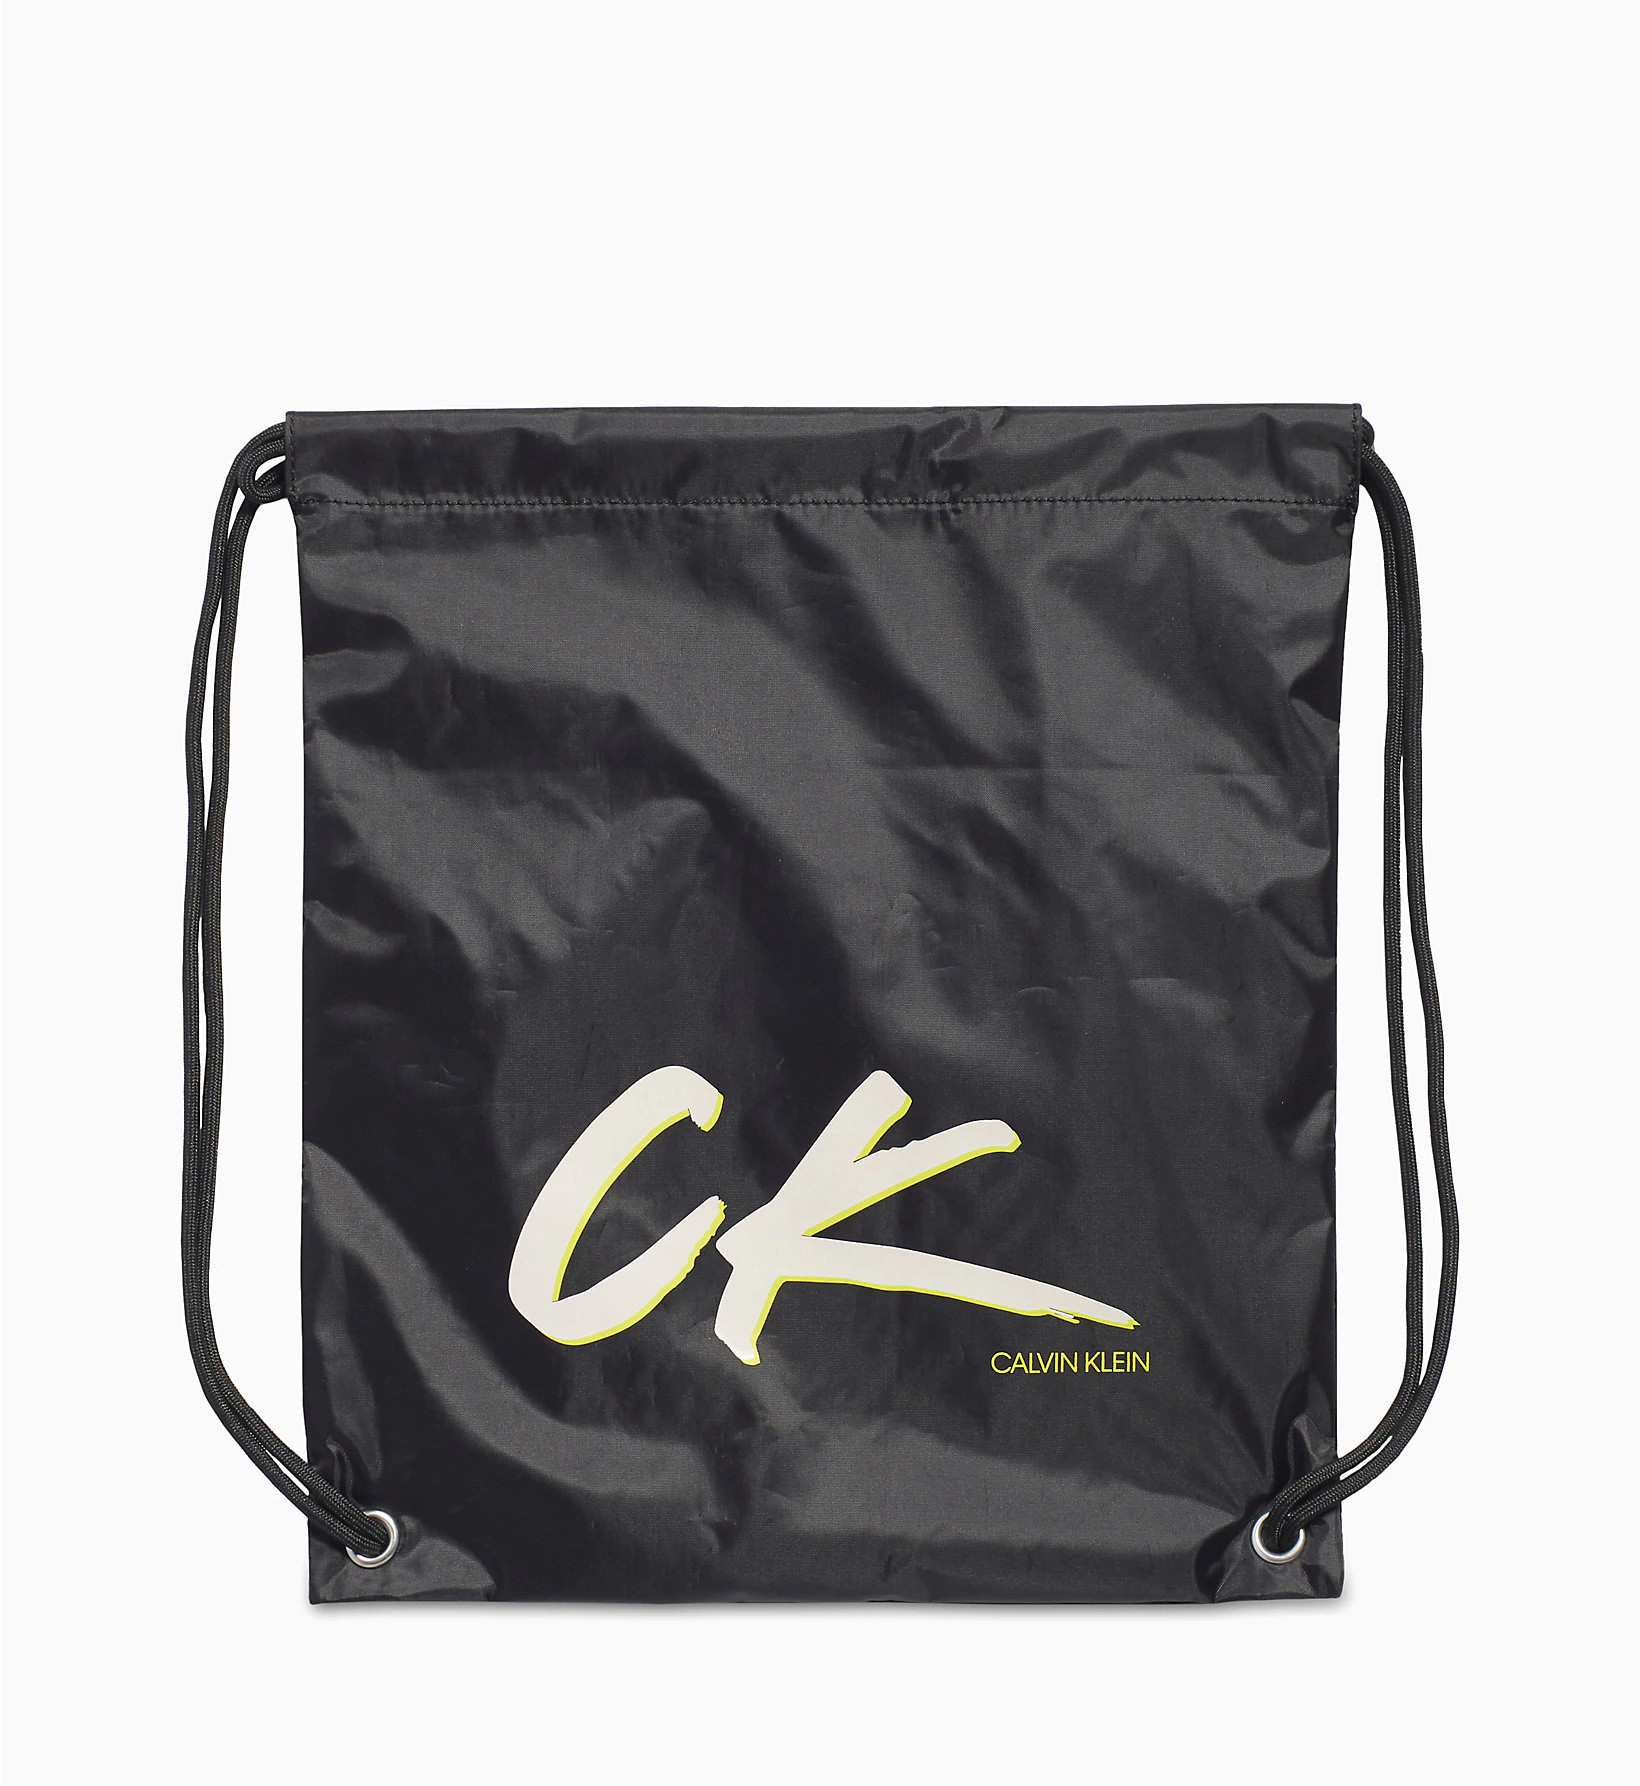 Vak K90KK00001-BEH černá - Calvin Klein černá one size